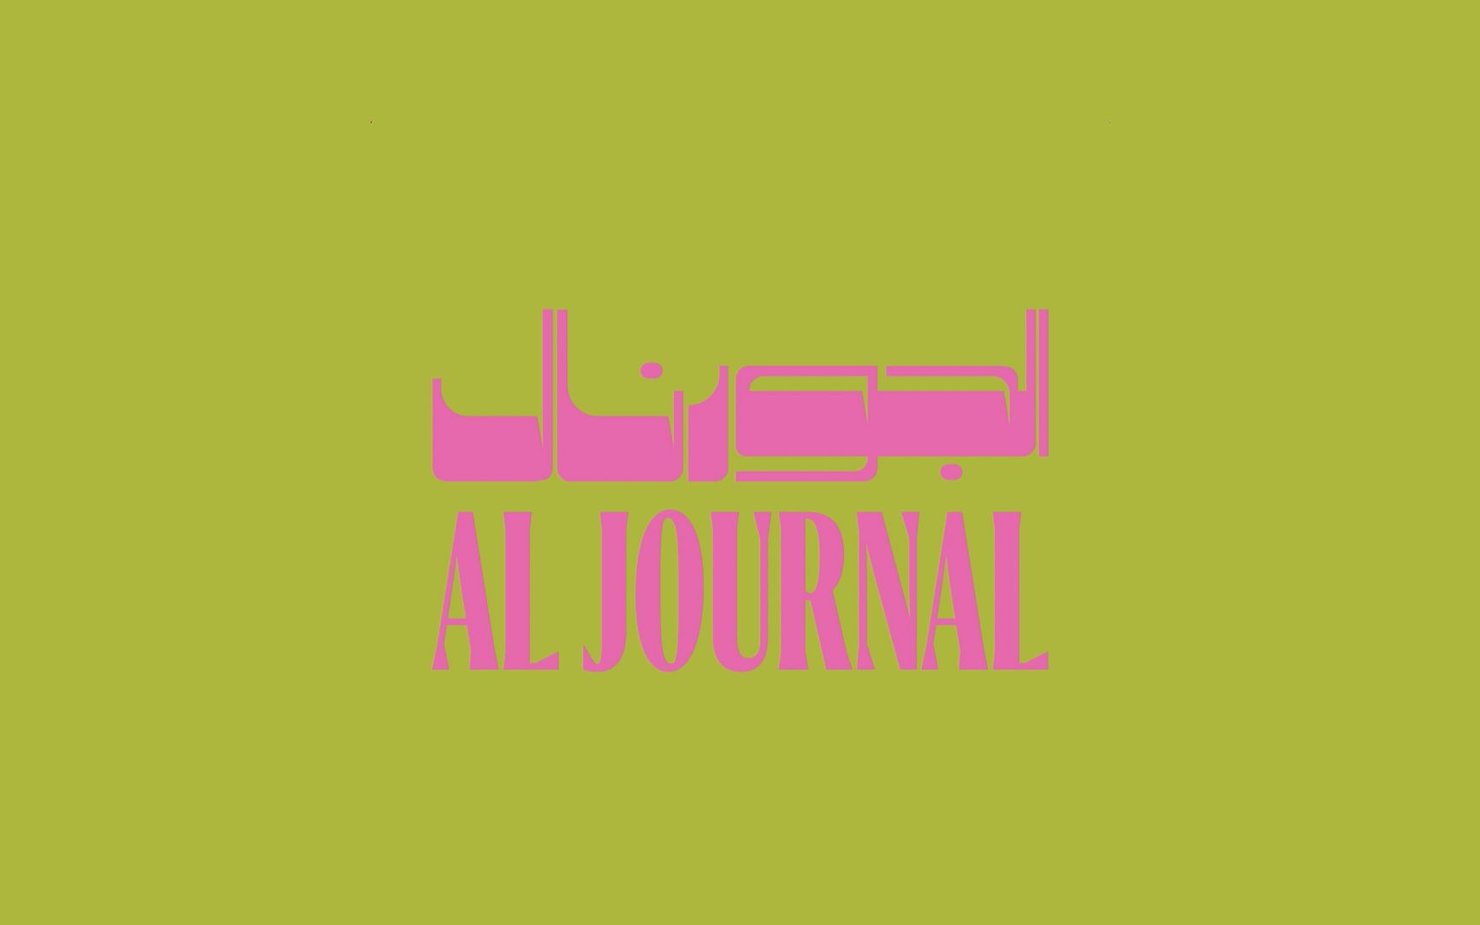 aljournal logo in pink